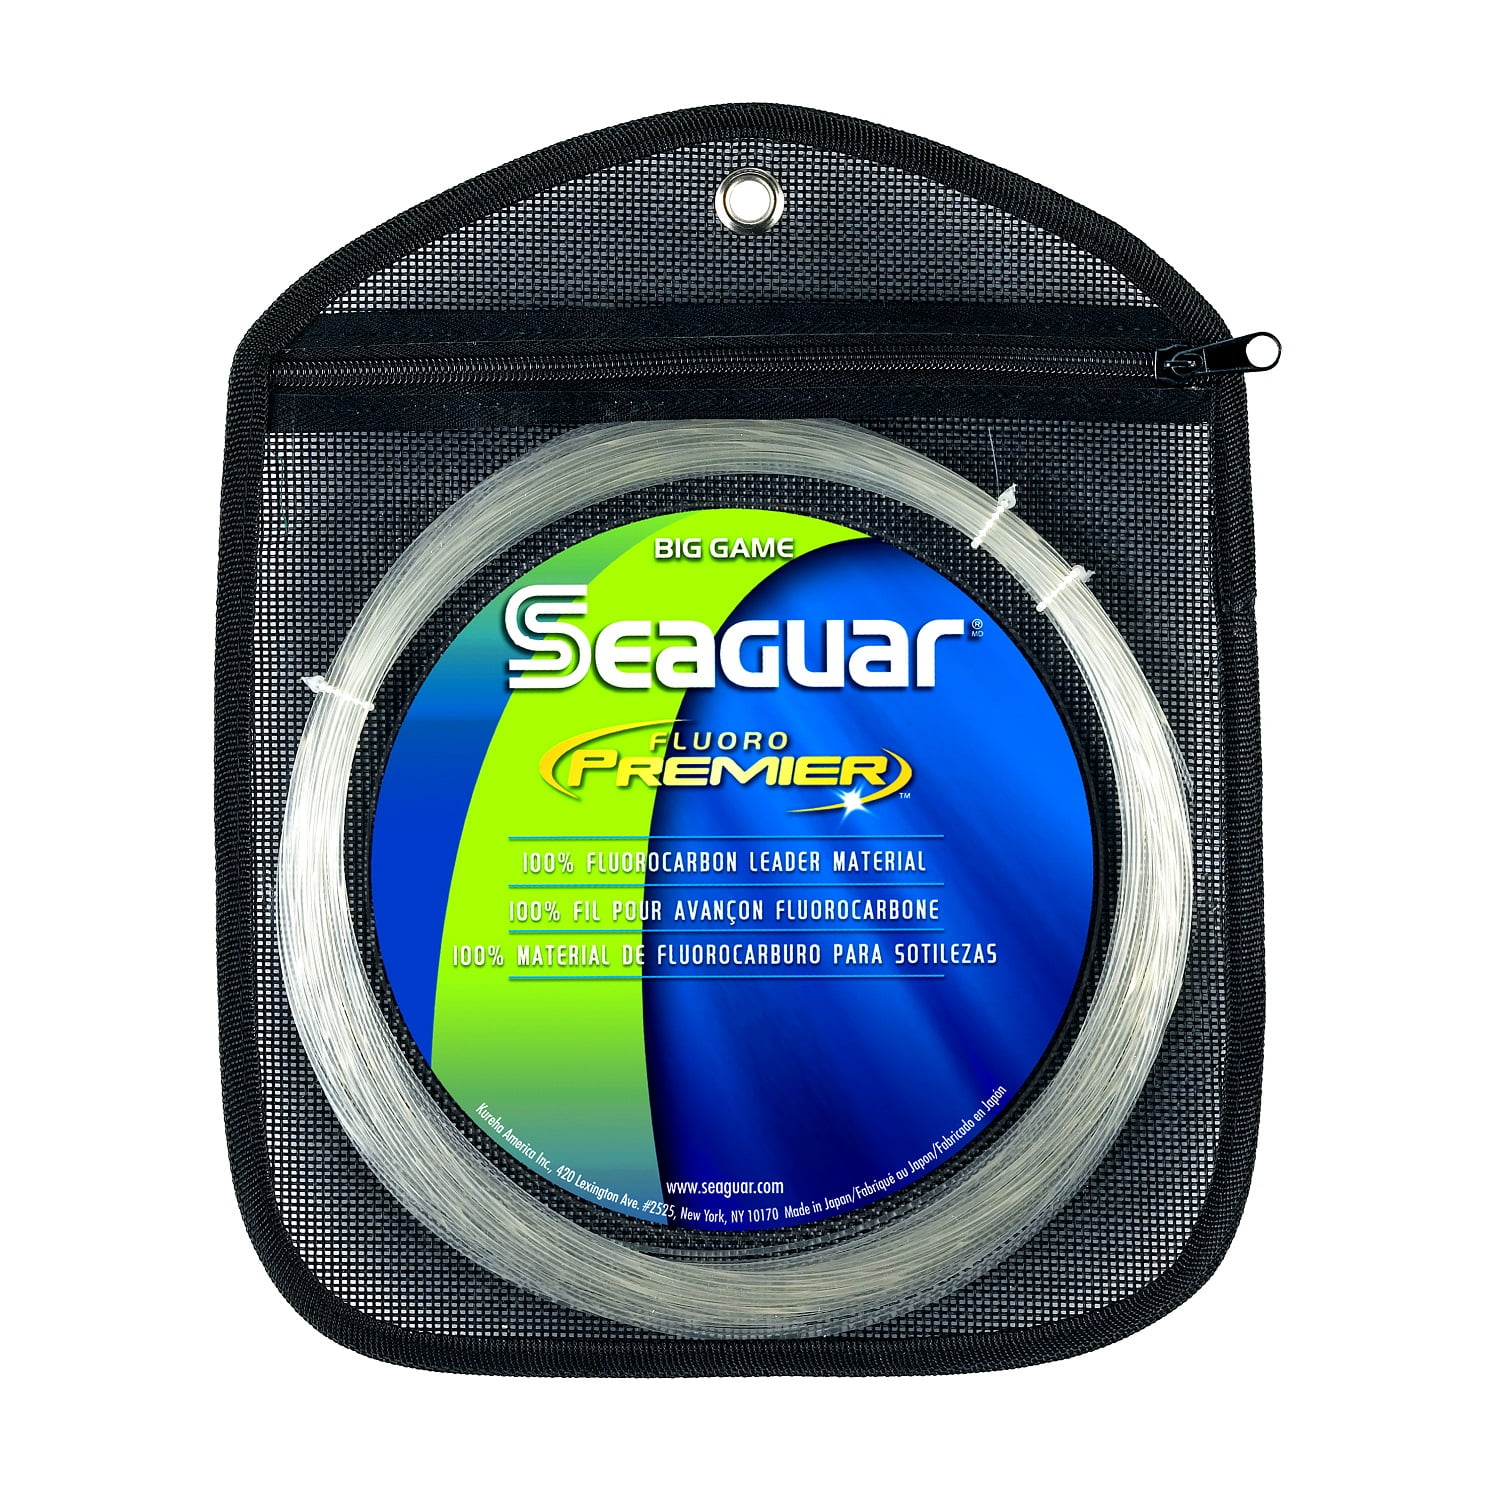 Seaguar Fluoro Premier 100% Fluorocarbon Leader 25 yds 